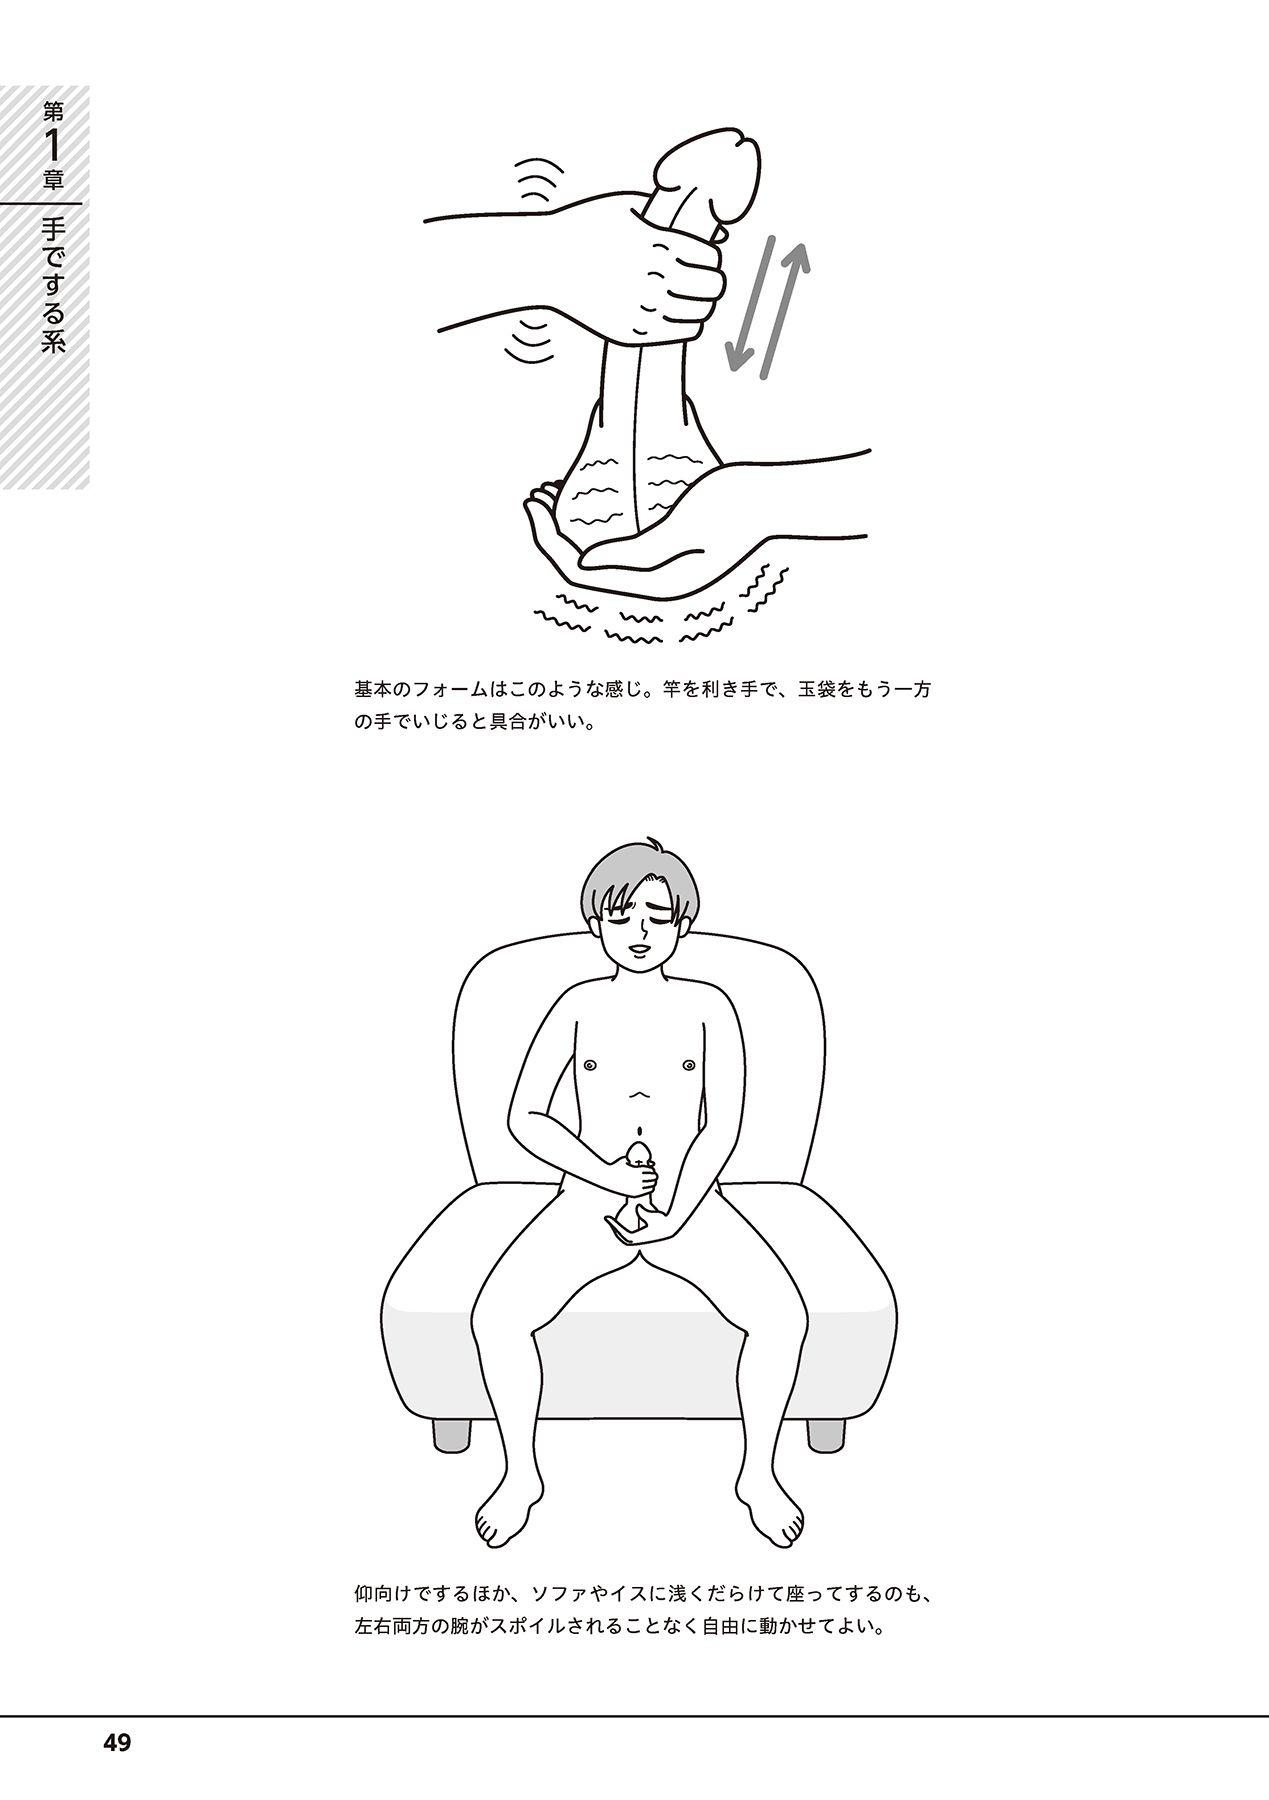 Otoko no Jii Onanie Kanzen Manual Illustration Han...... Onanie Play 50